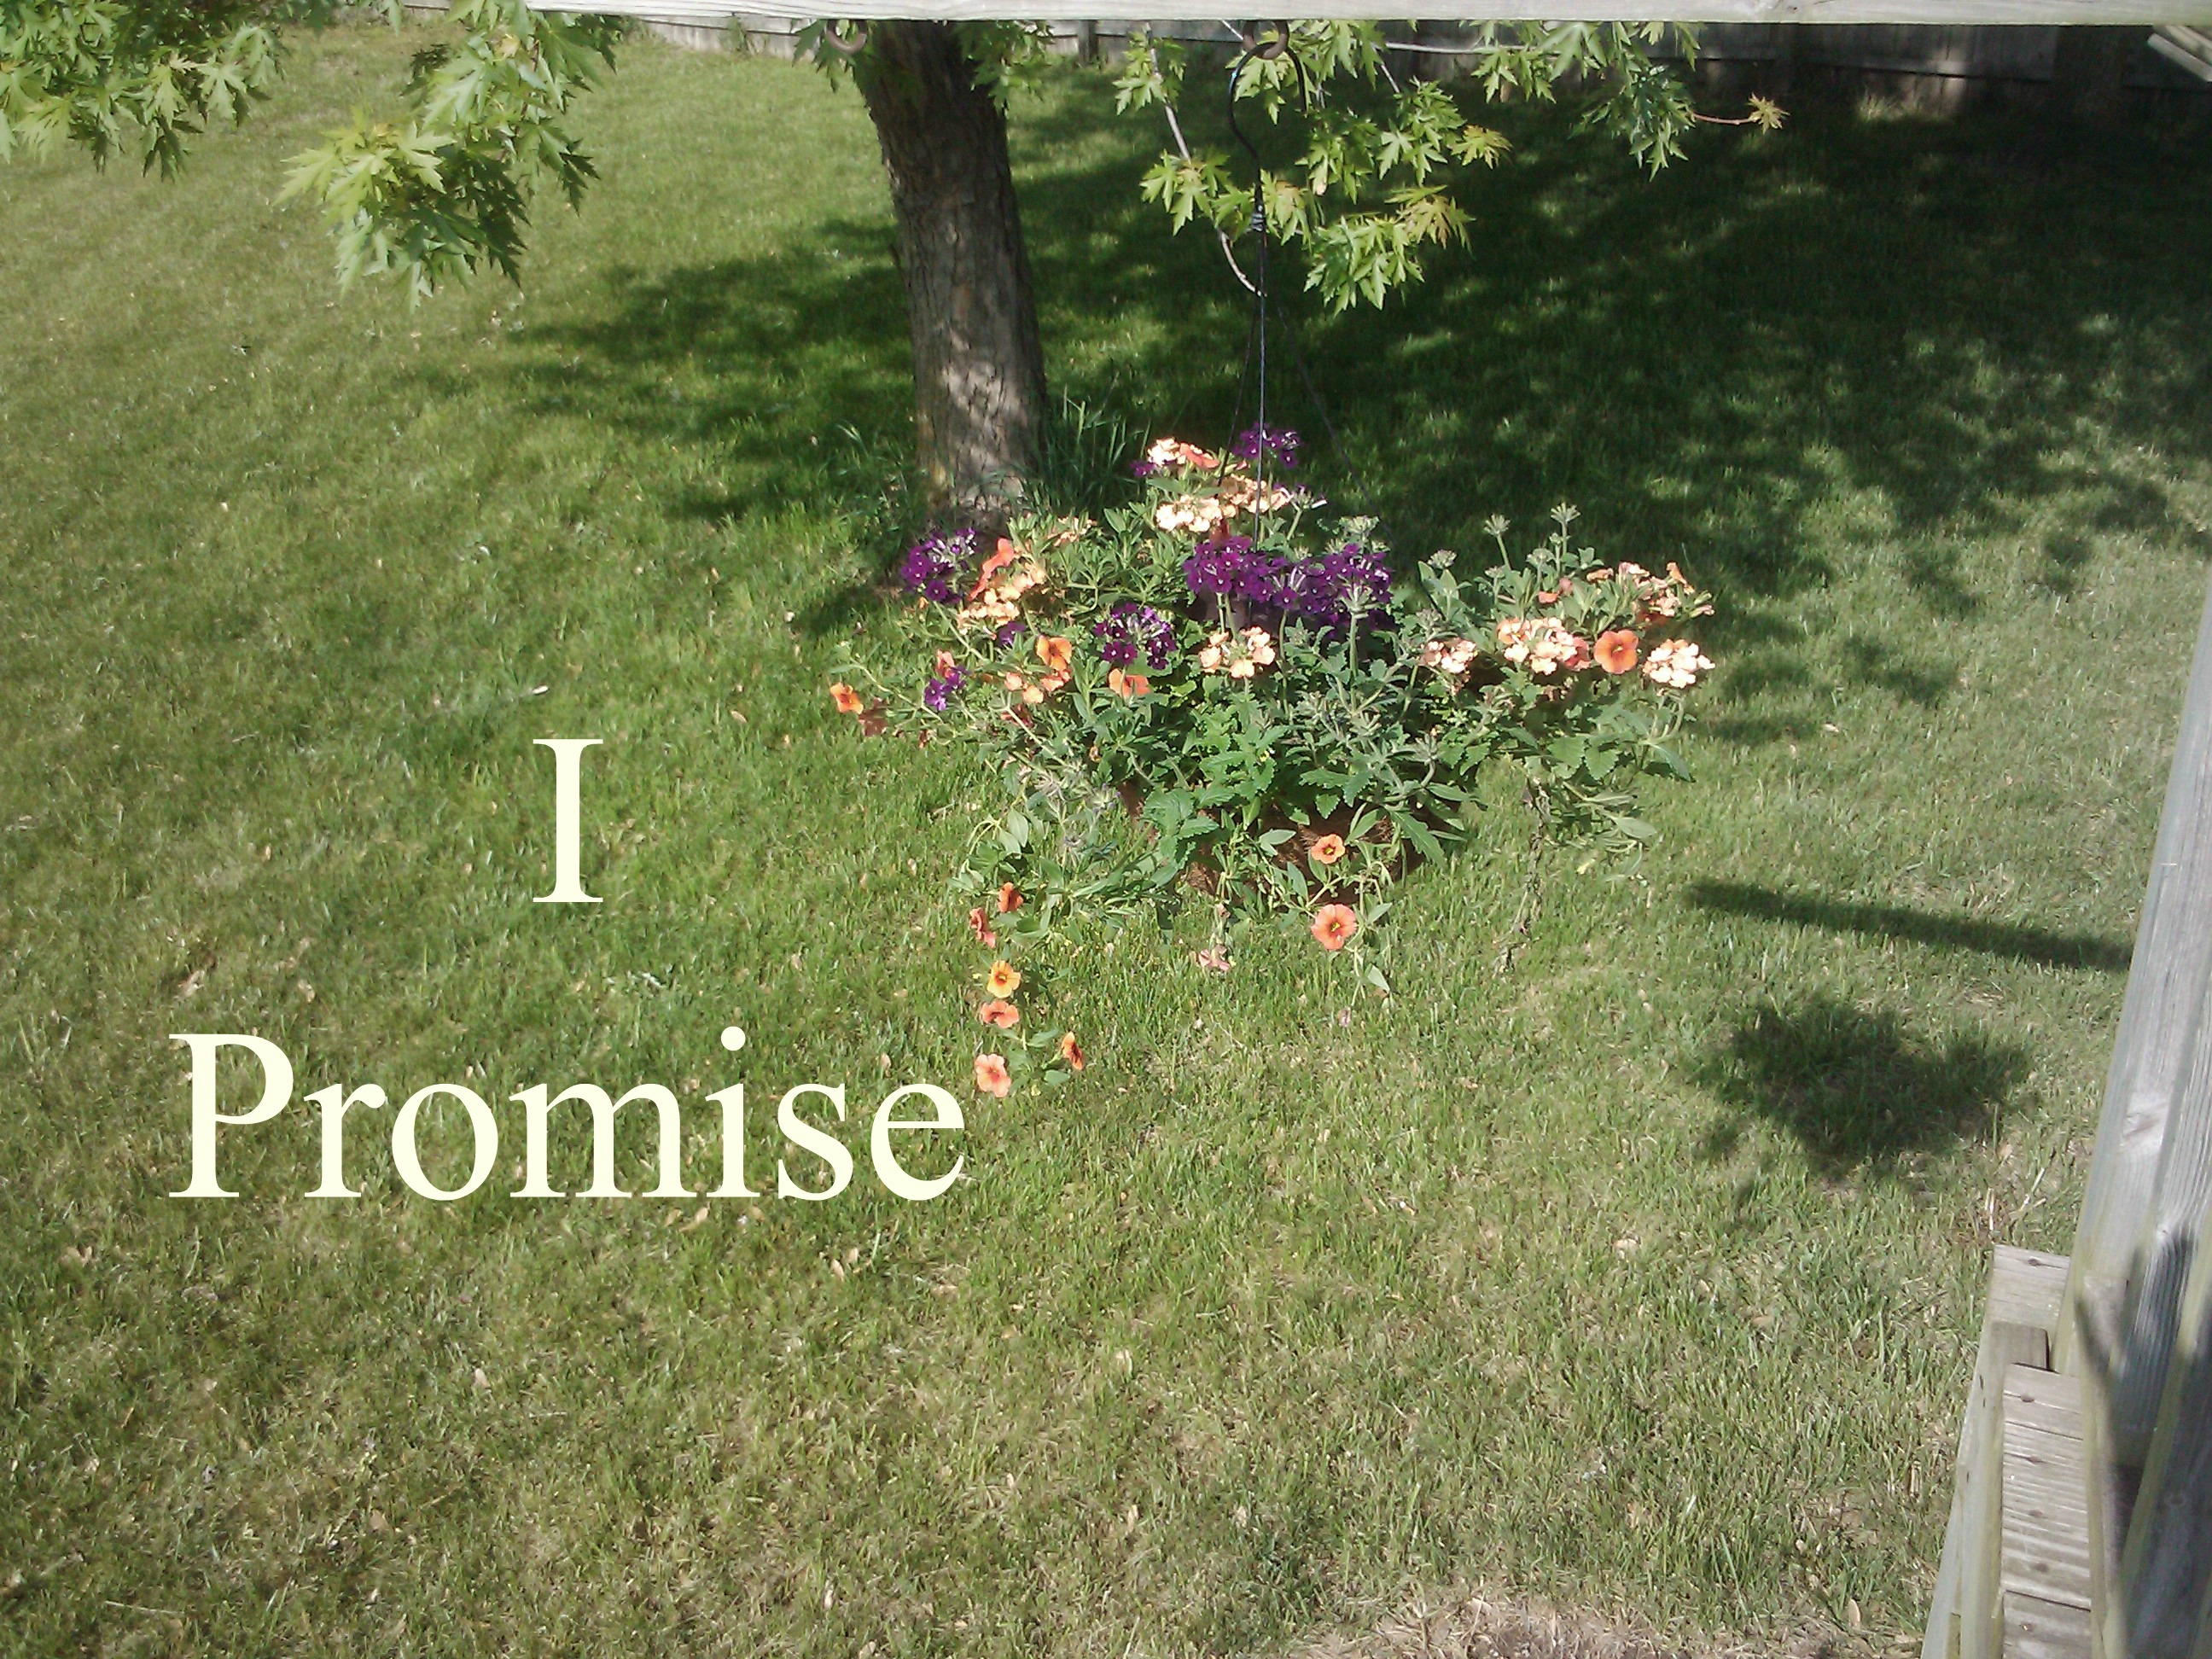 i-promise